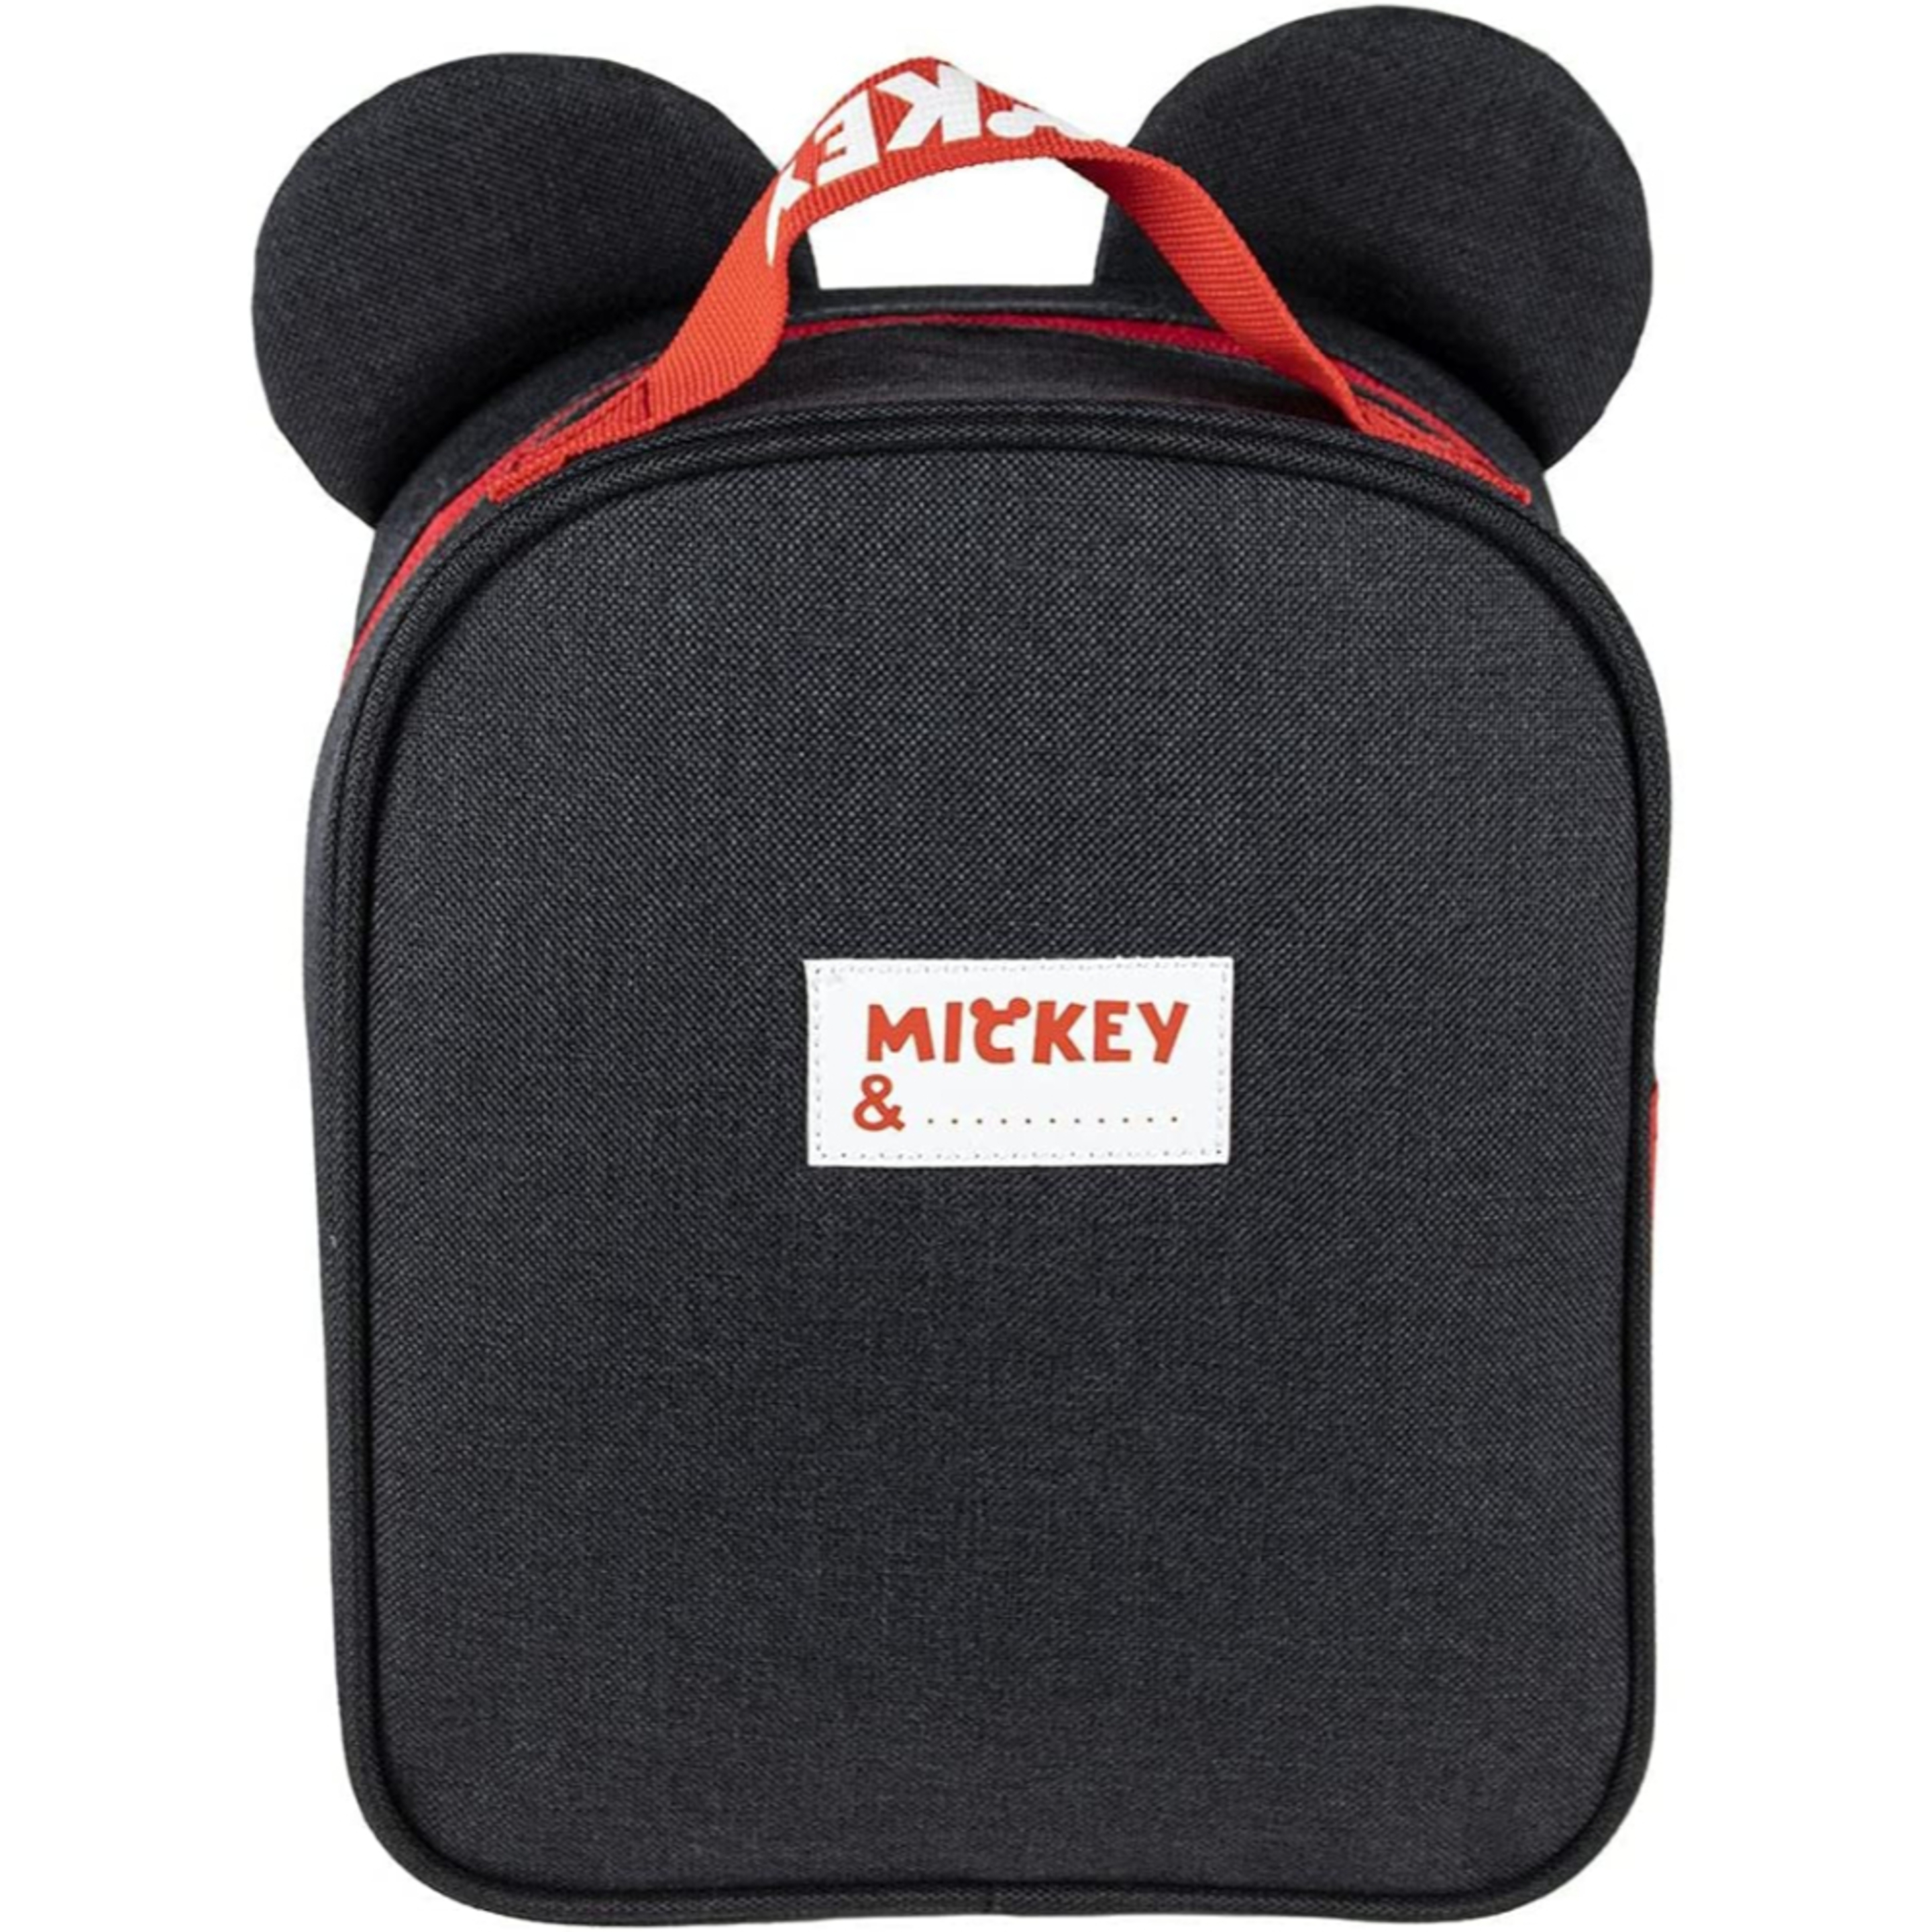 Bolsa Portaalimentos Mickey Mouse Con Forma 3d | Sport Zone MKP